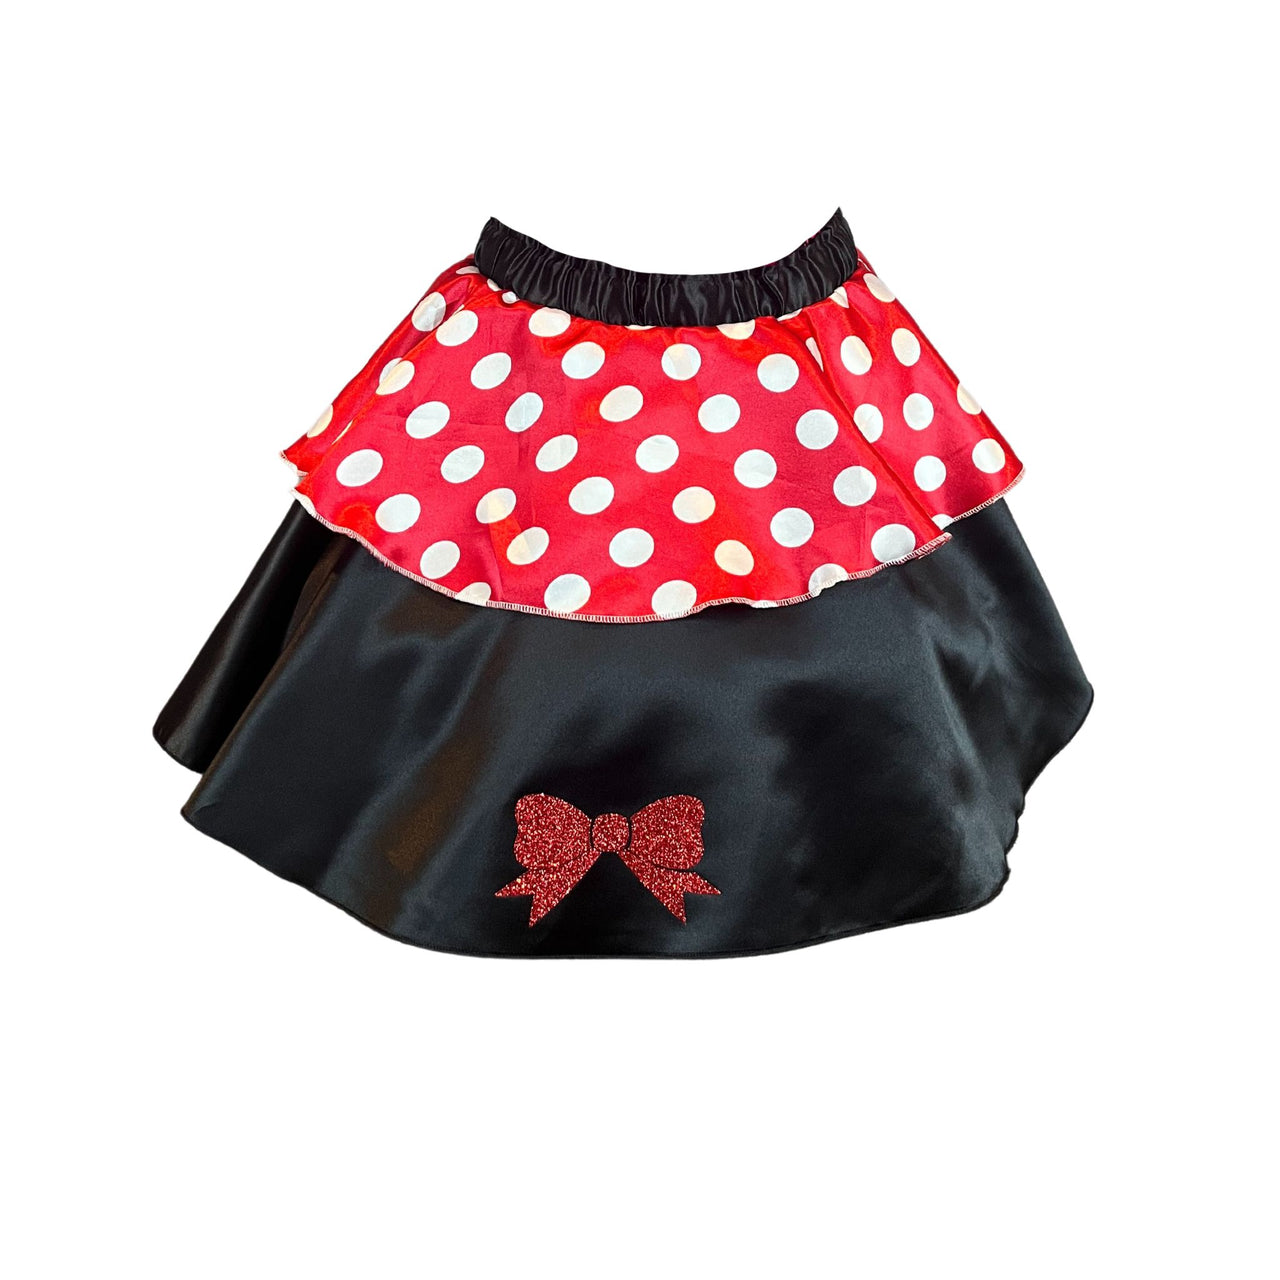 Miss Mouse Inspired Royalty Skirt